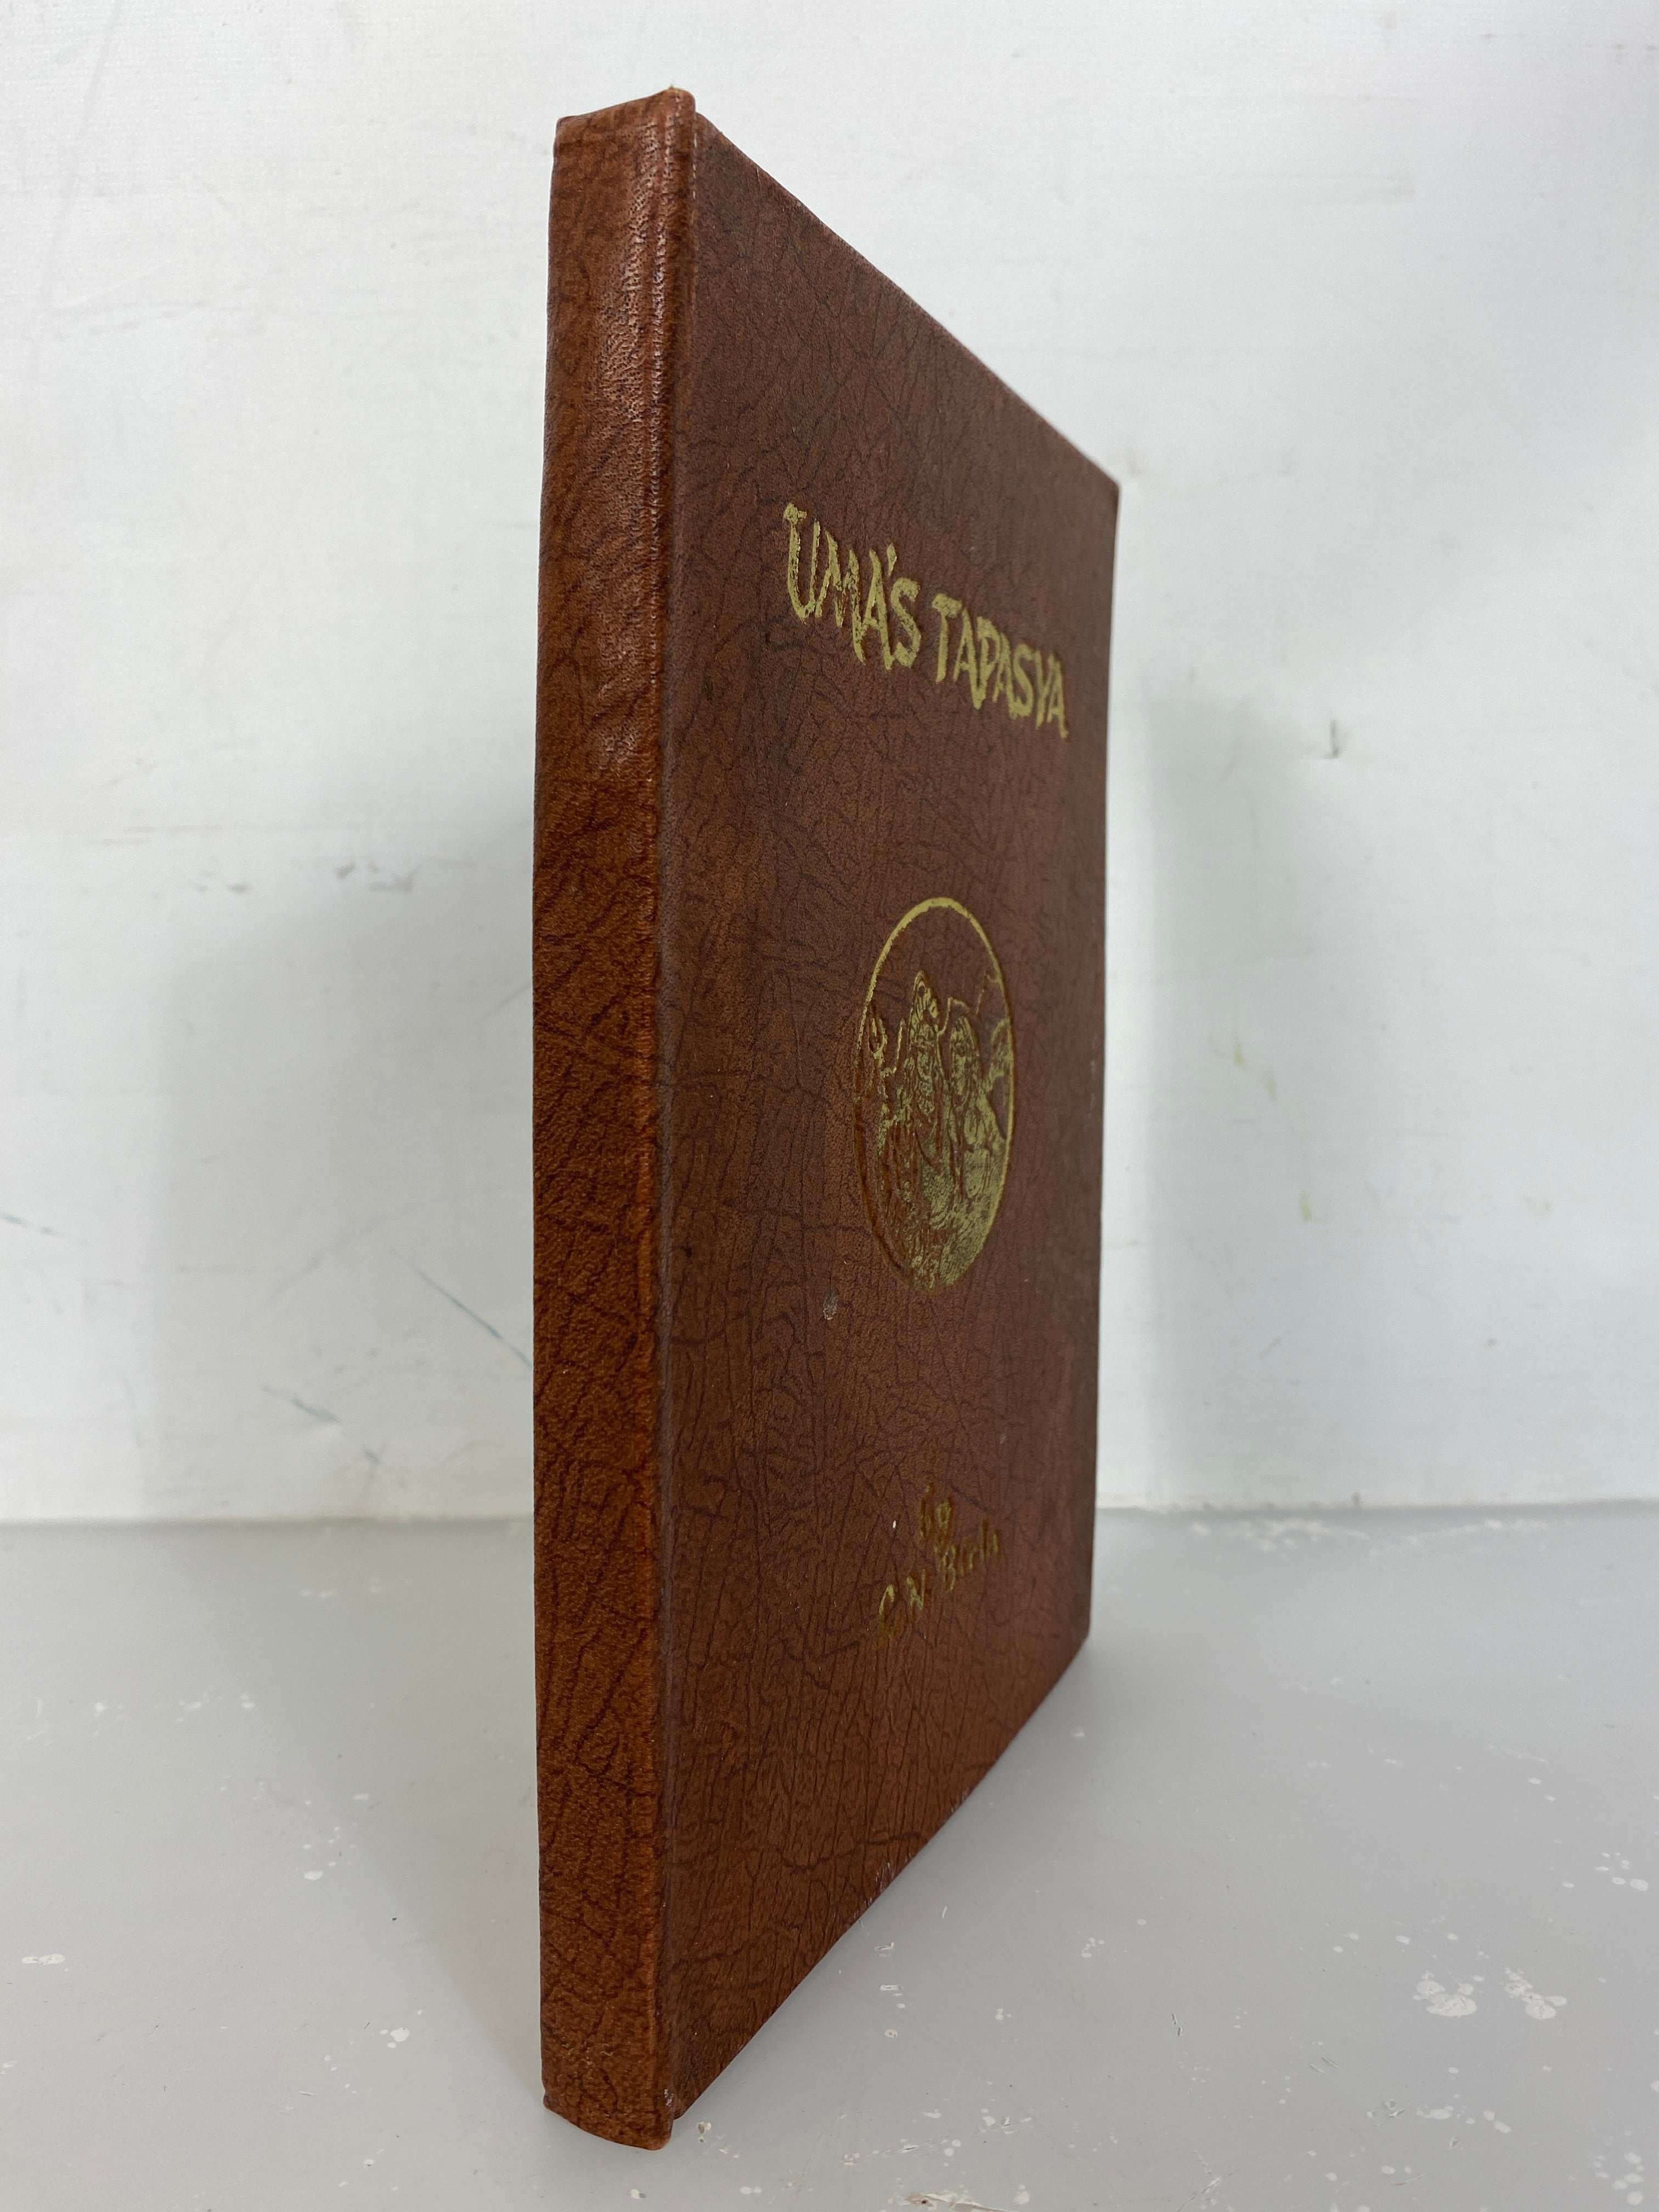 Poetry Book Uma's Tapasya by L.N. Birla 1961 HC